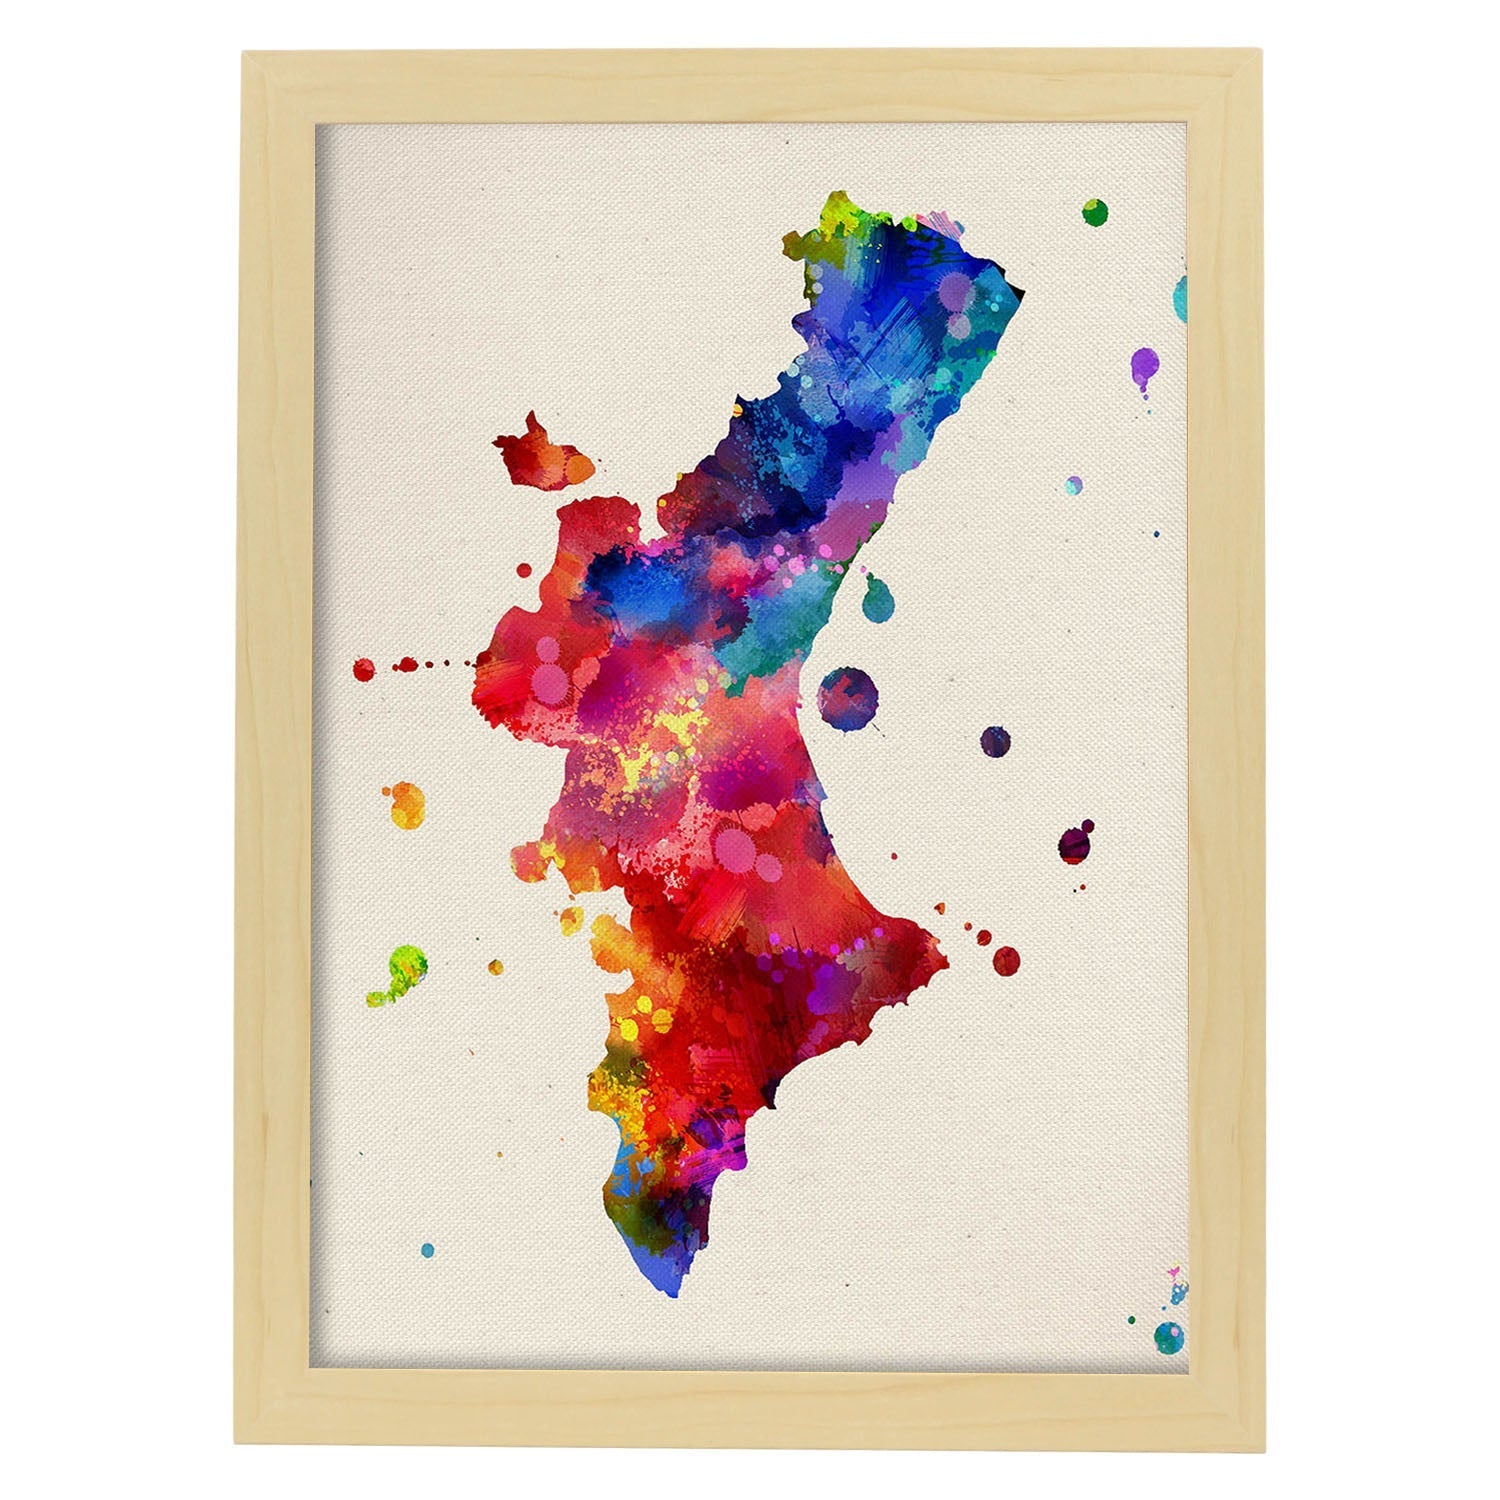 Poster de Valencia. Láminas e ilustraciones de ciudades, comunidades, y mapas de España.-Artwork-Nacnic-A4-Marco Madera clara-Nacnic Estudio SL